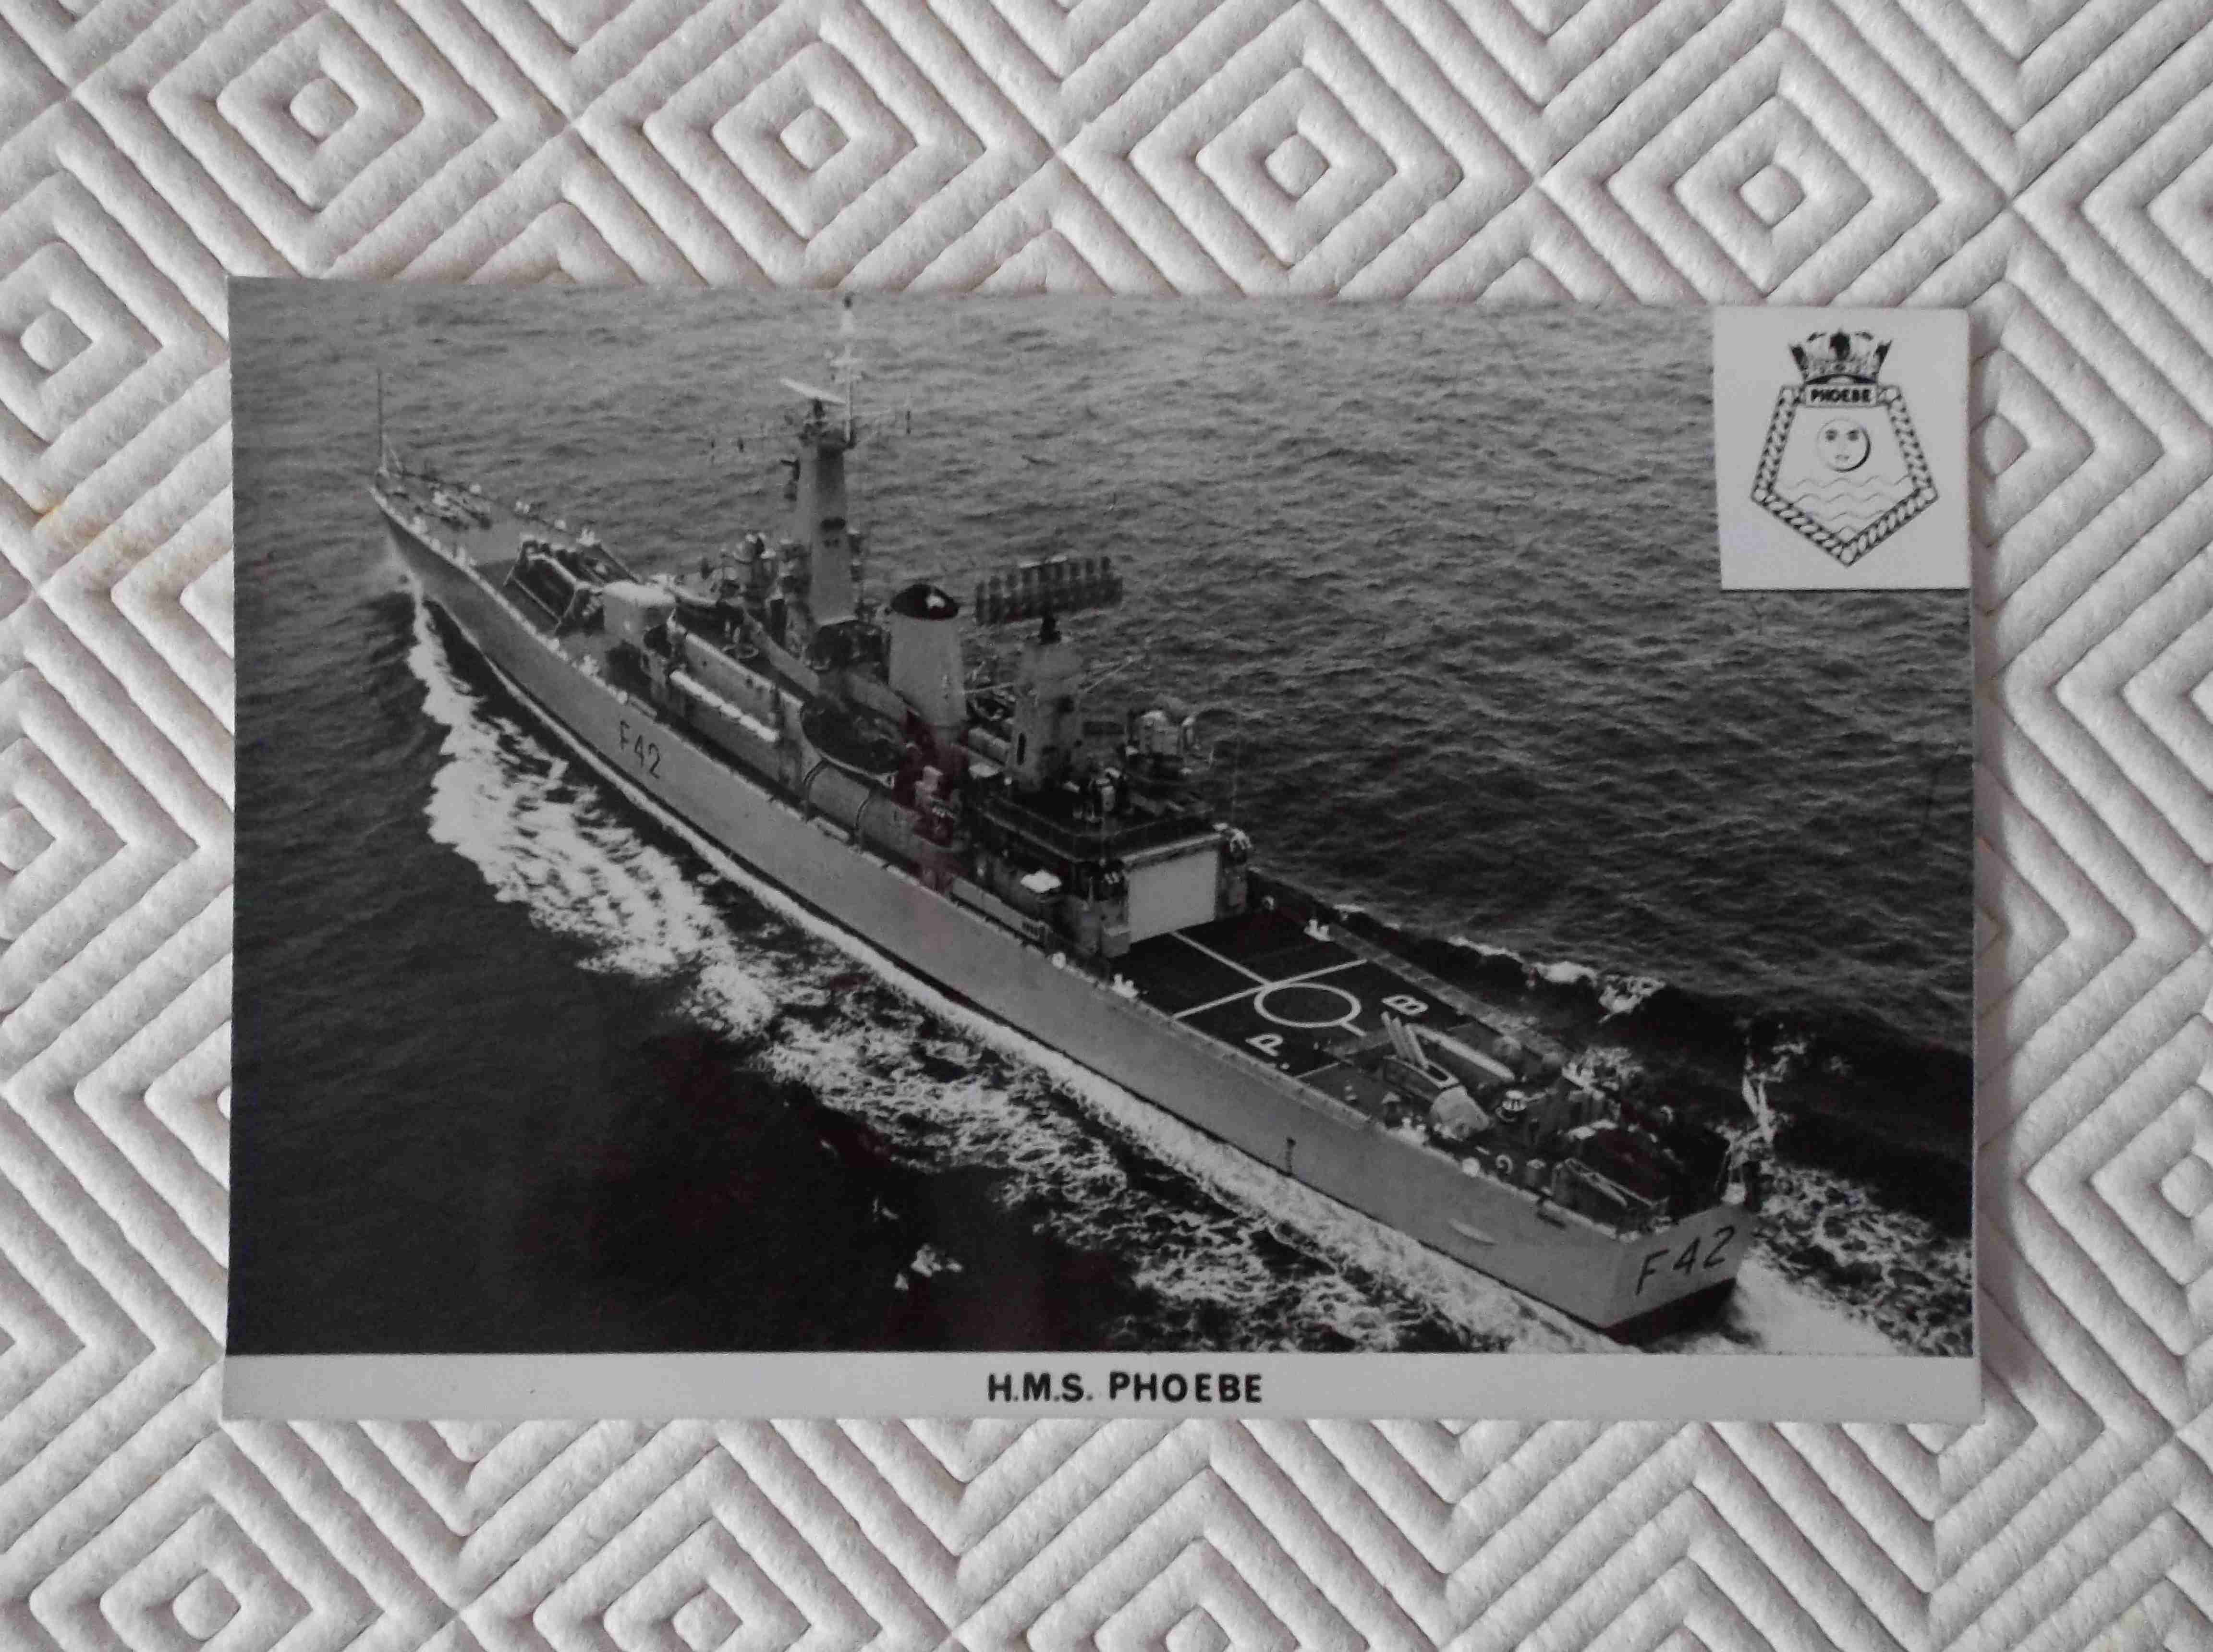 POSTCARD SIZE PHOTOGRAPH OF THE ROYAL NAVAL VESSEL HMS PHOEBE